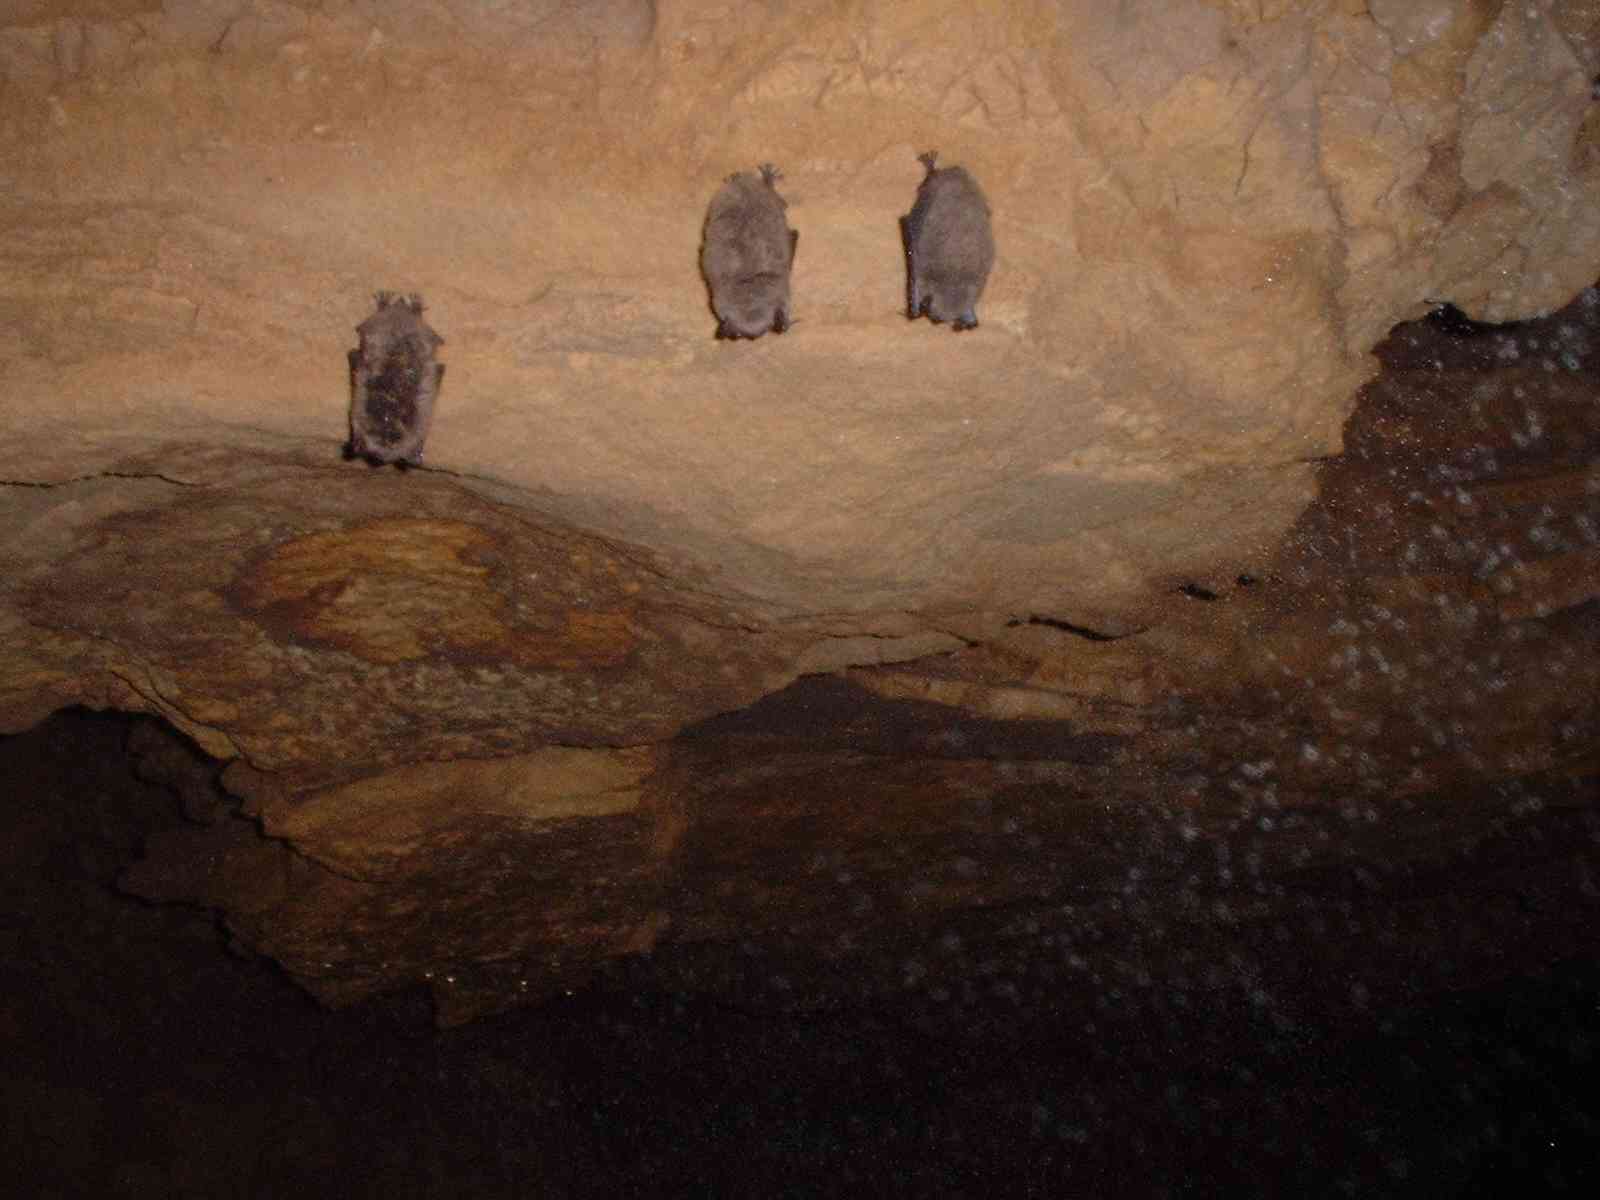 Three hibernating bats